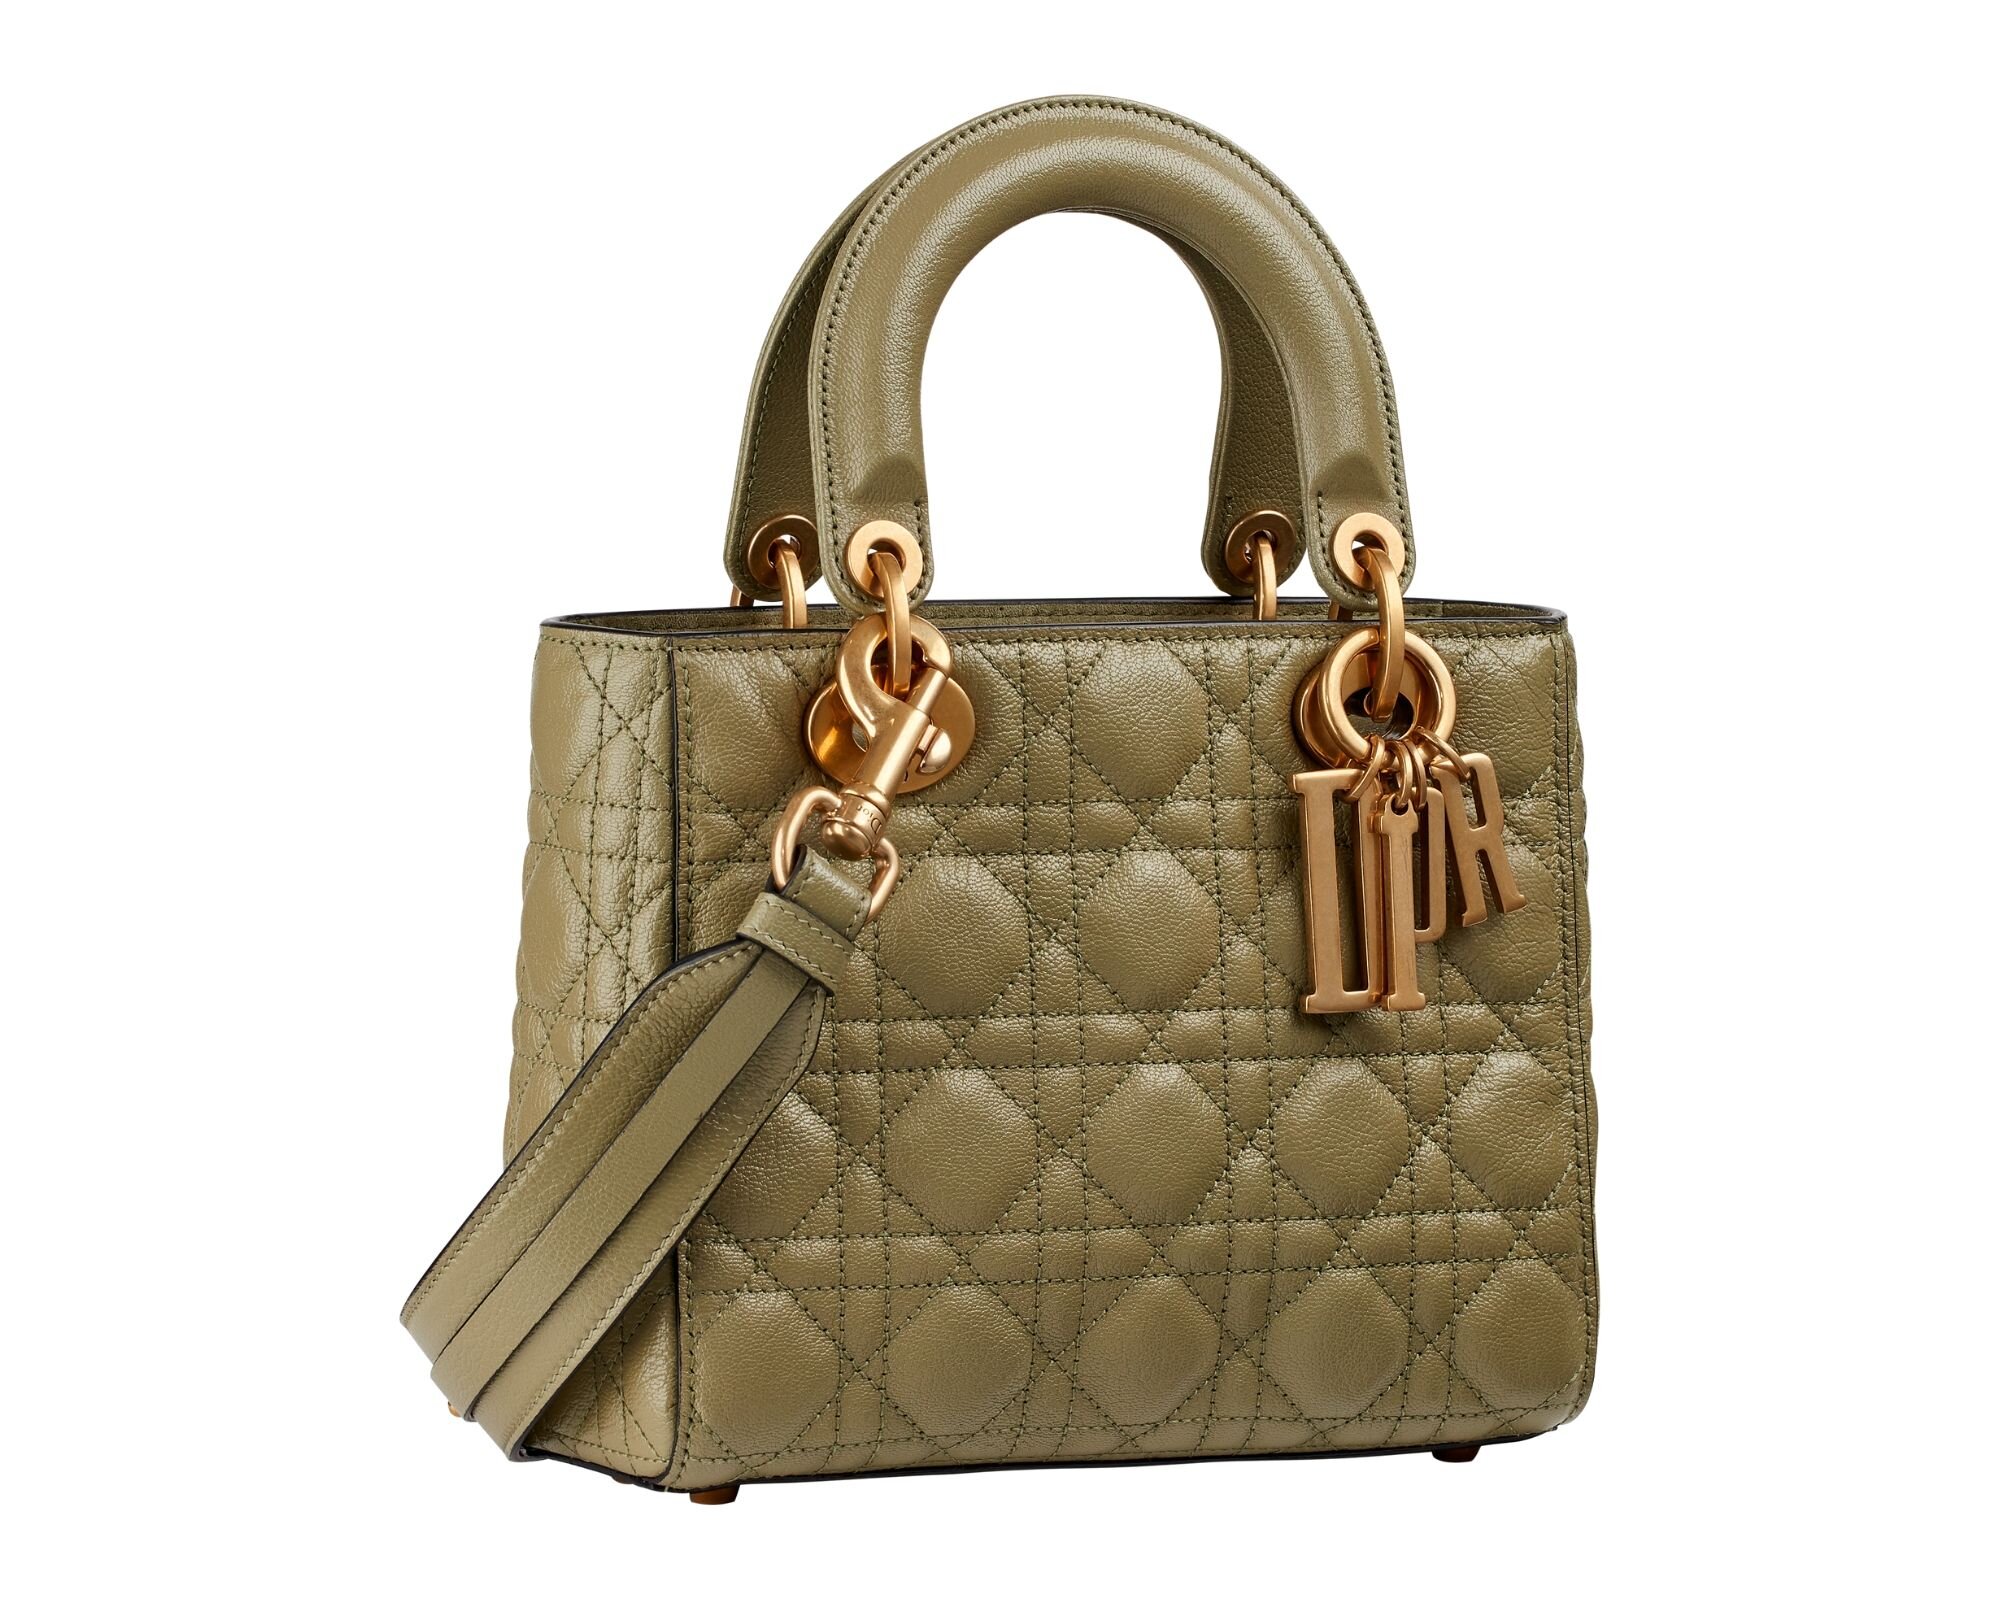 DIOR- What's Ladylike Handbag